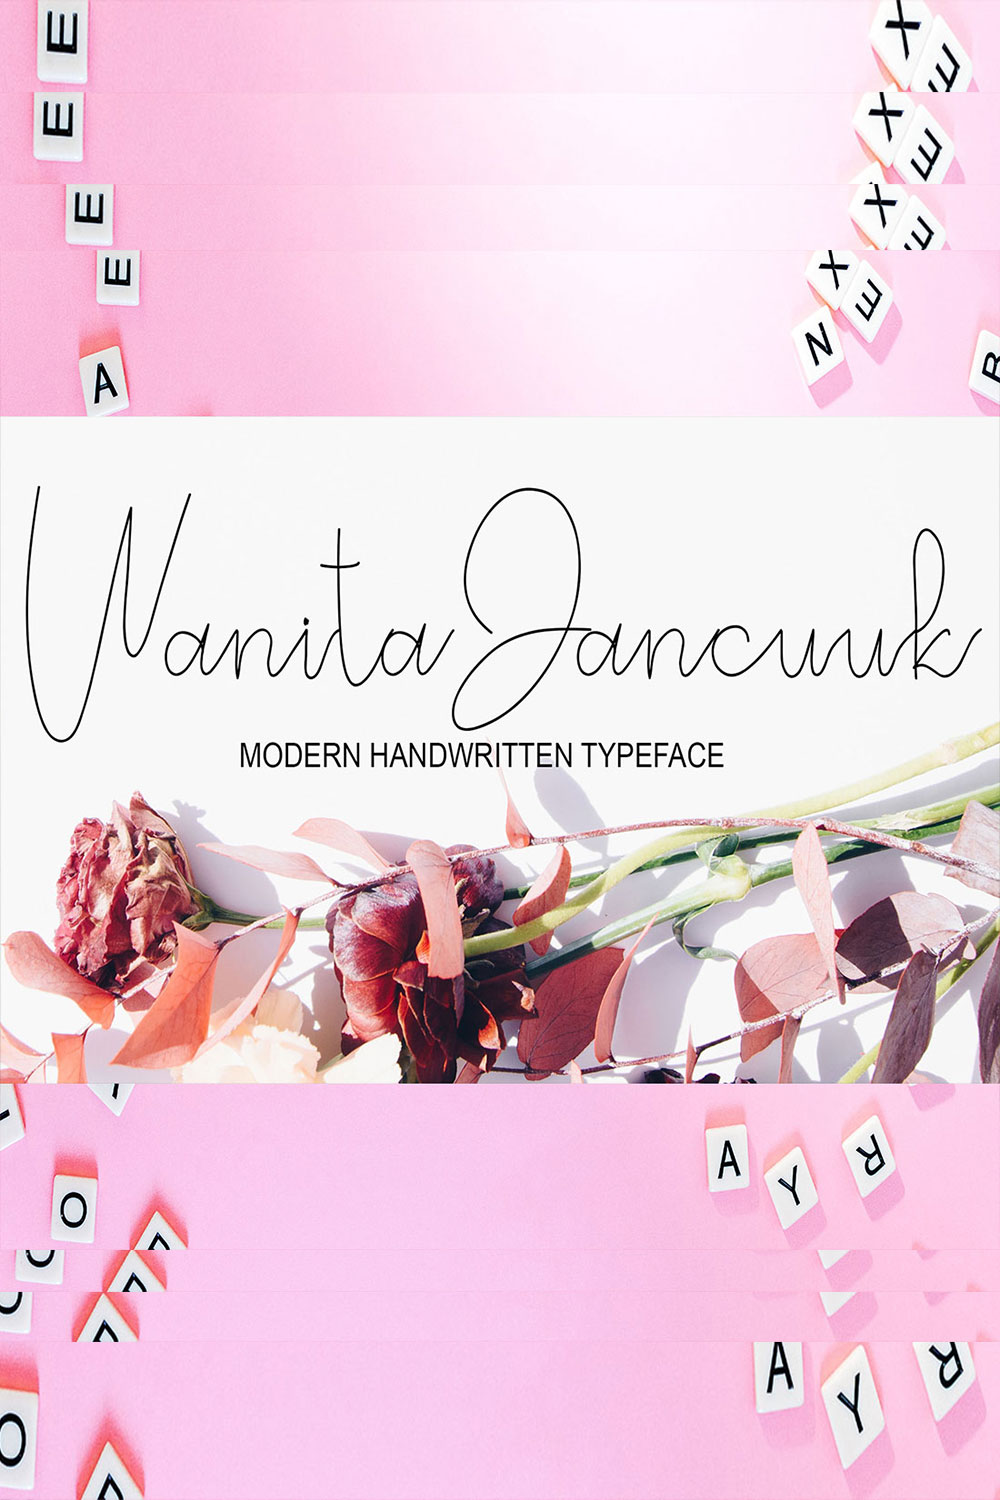 An image with text showing the beautiful Wanita Jancuuk font.